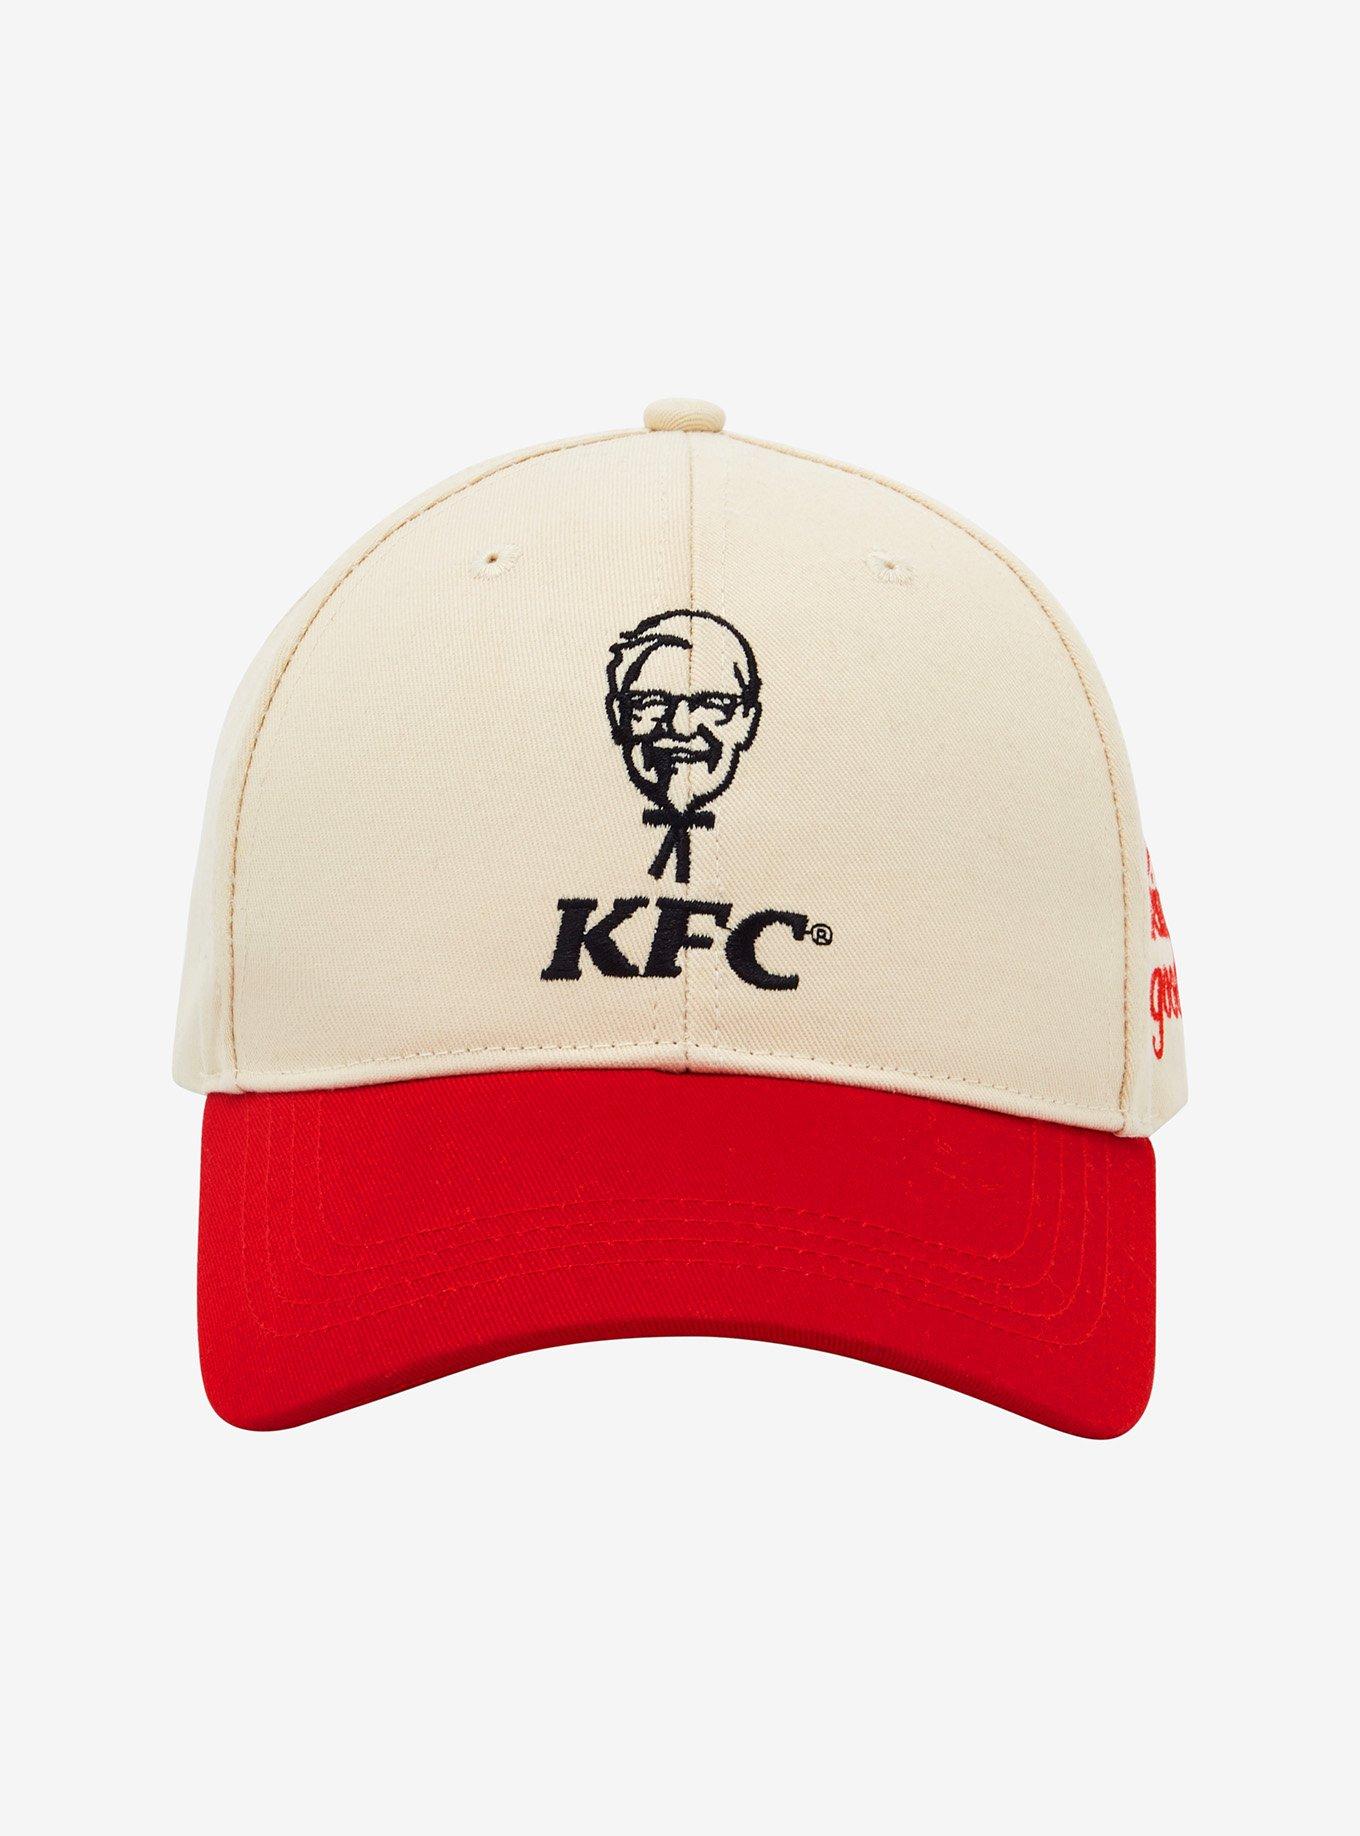 KFC Colonel Sanders Portrait Ball Cap - BoxLunch Exclusive, , hi-res